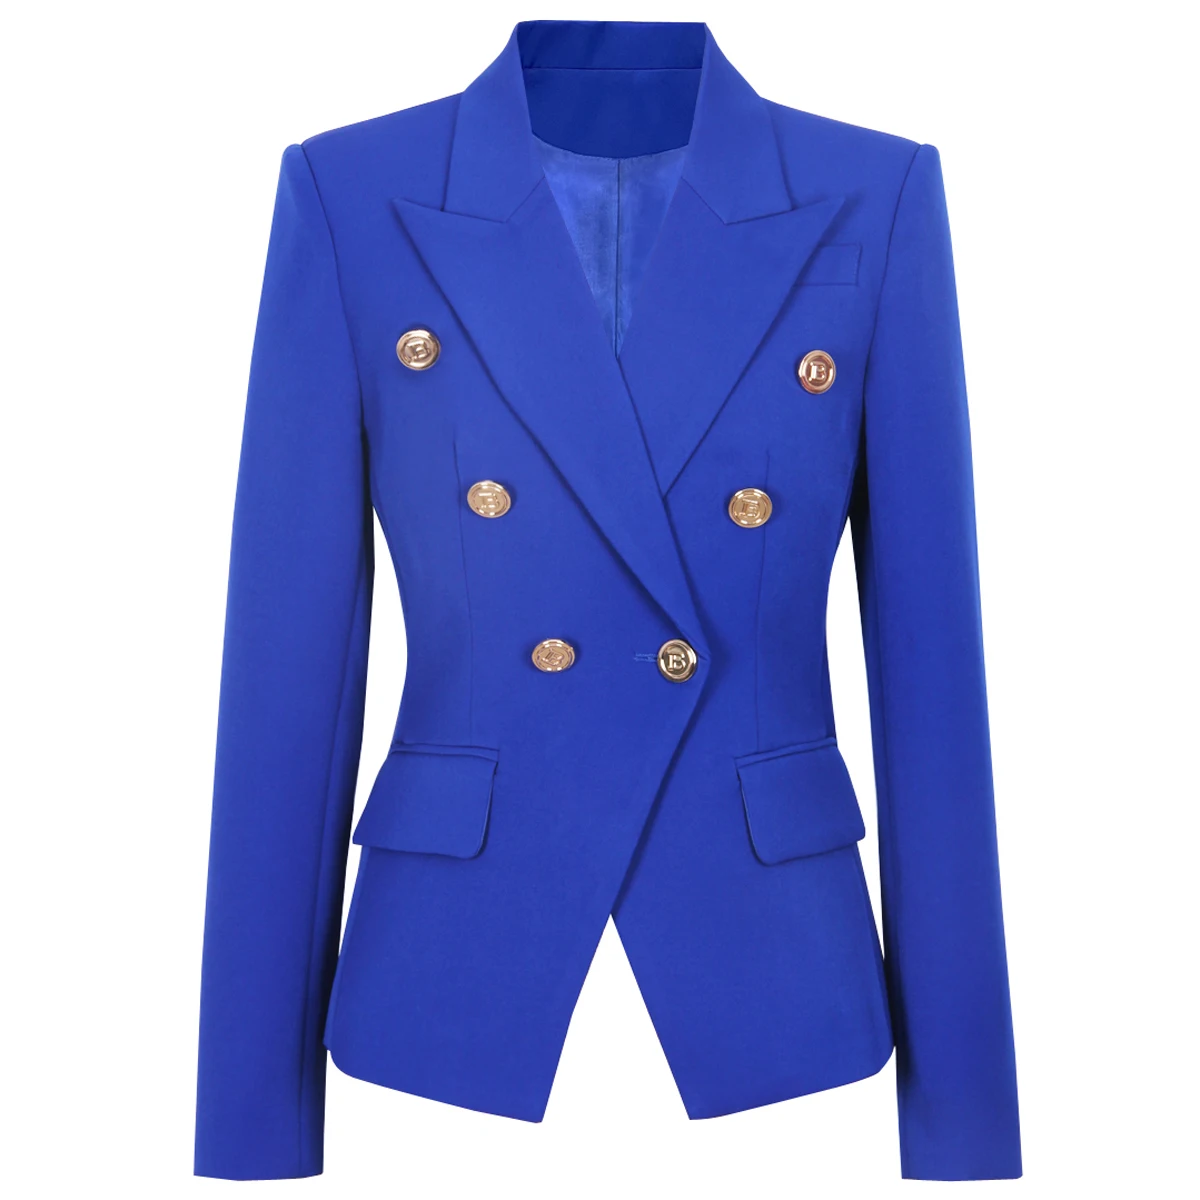 S-XXXL New Senior Ladies Suit Jacket Fashionable And Popular Classic Commuter Professional Simple Suit Top Women's Blazer